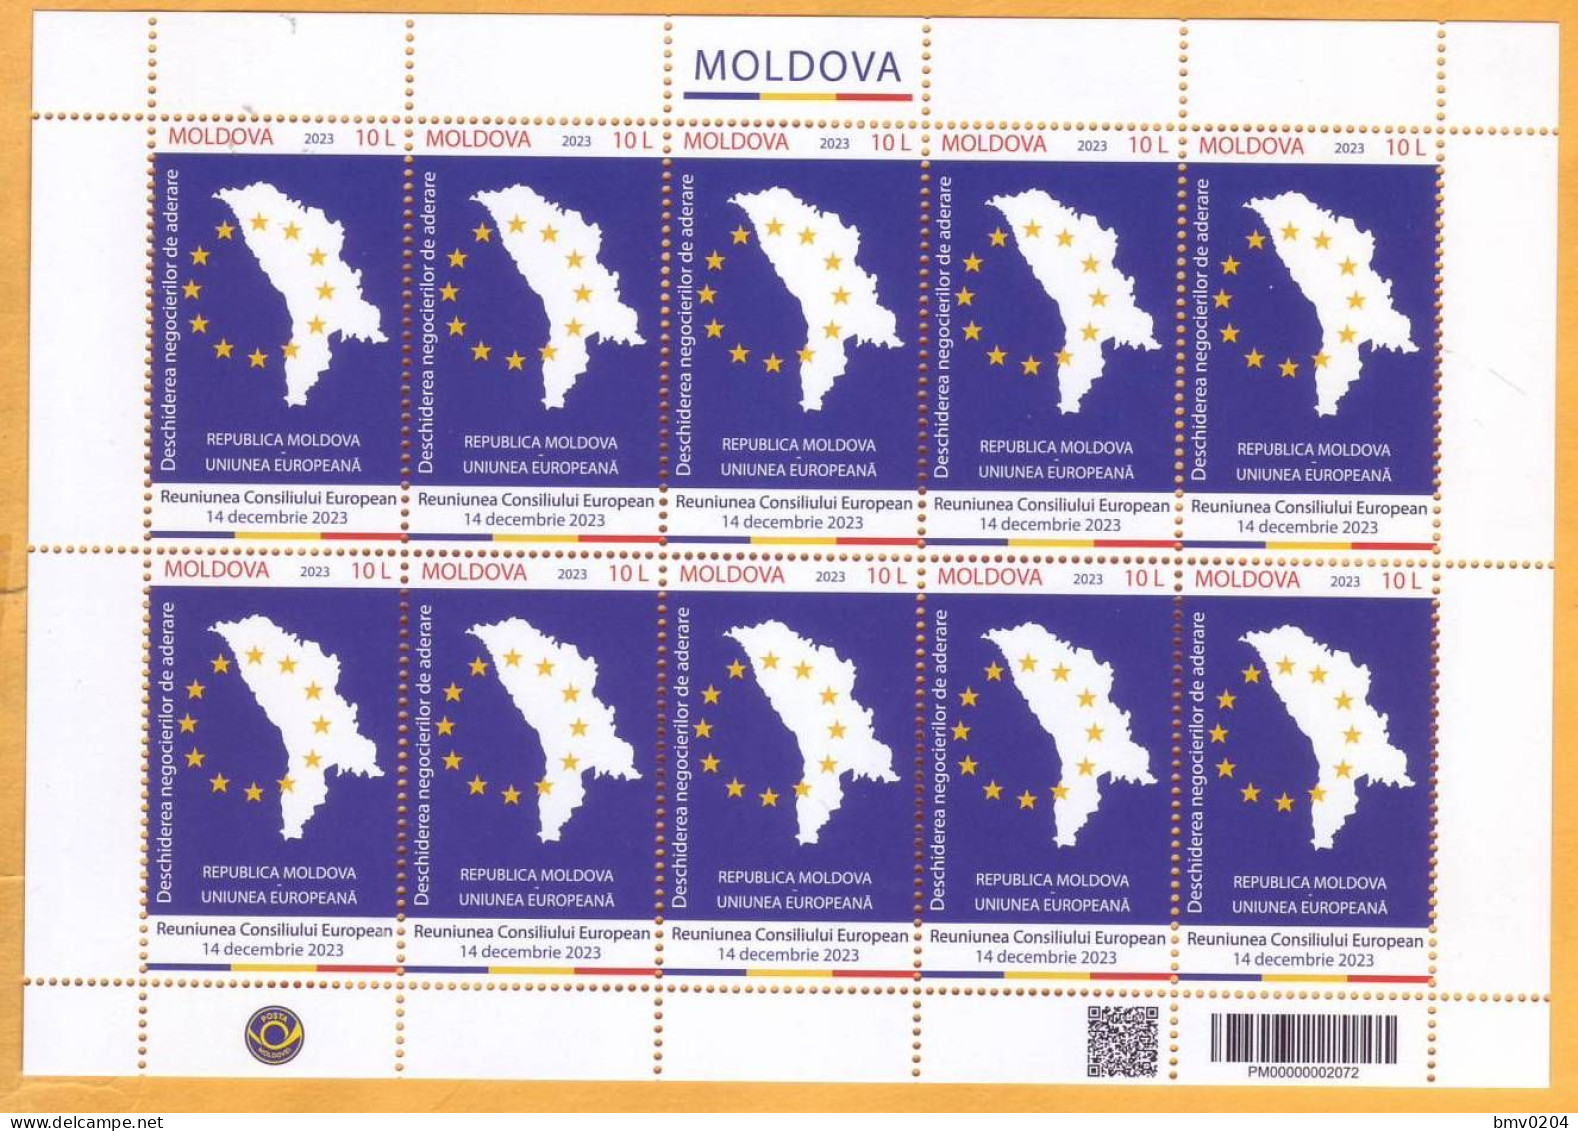 2023  Moldova  Sheet The Opening Of Accession Negotiations REPUBLIC OF MOLDOVA - EUROPEAN UNION  Mint - European Ideas